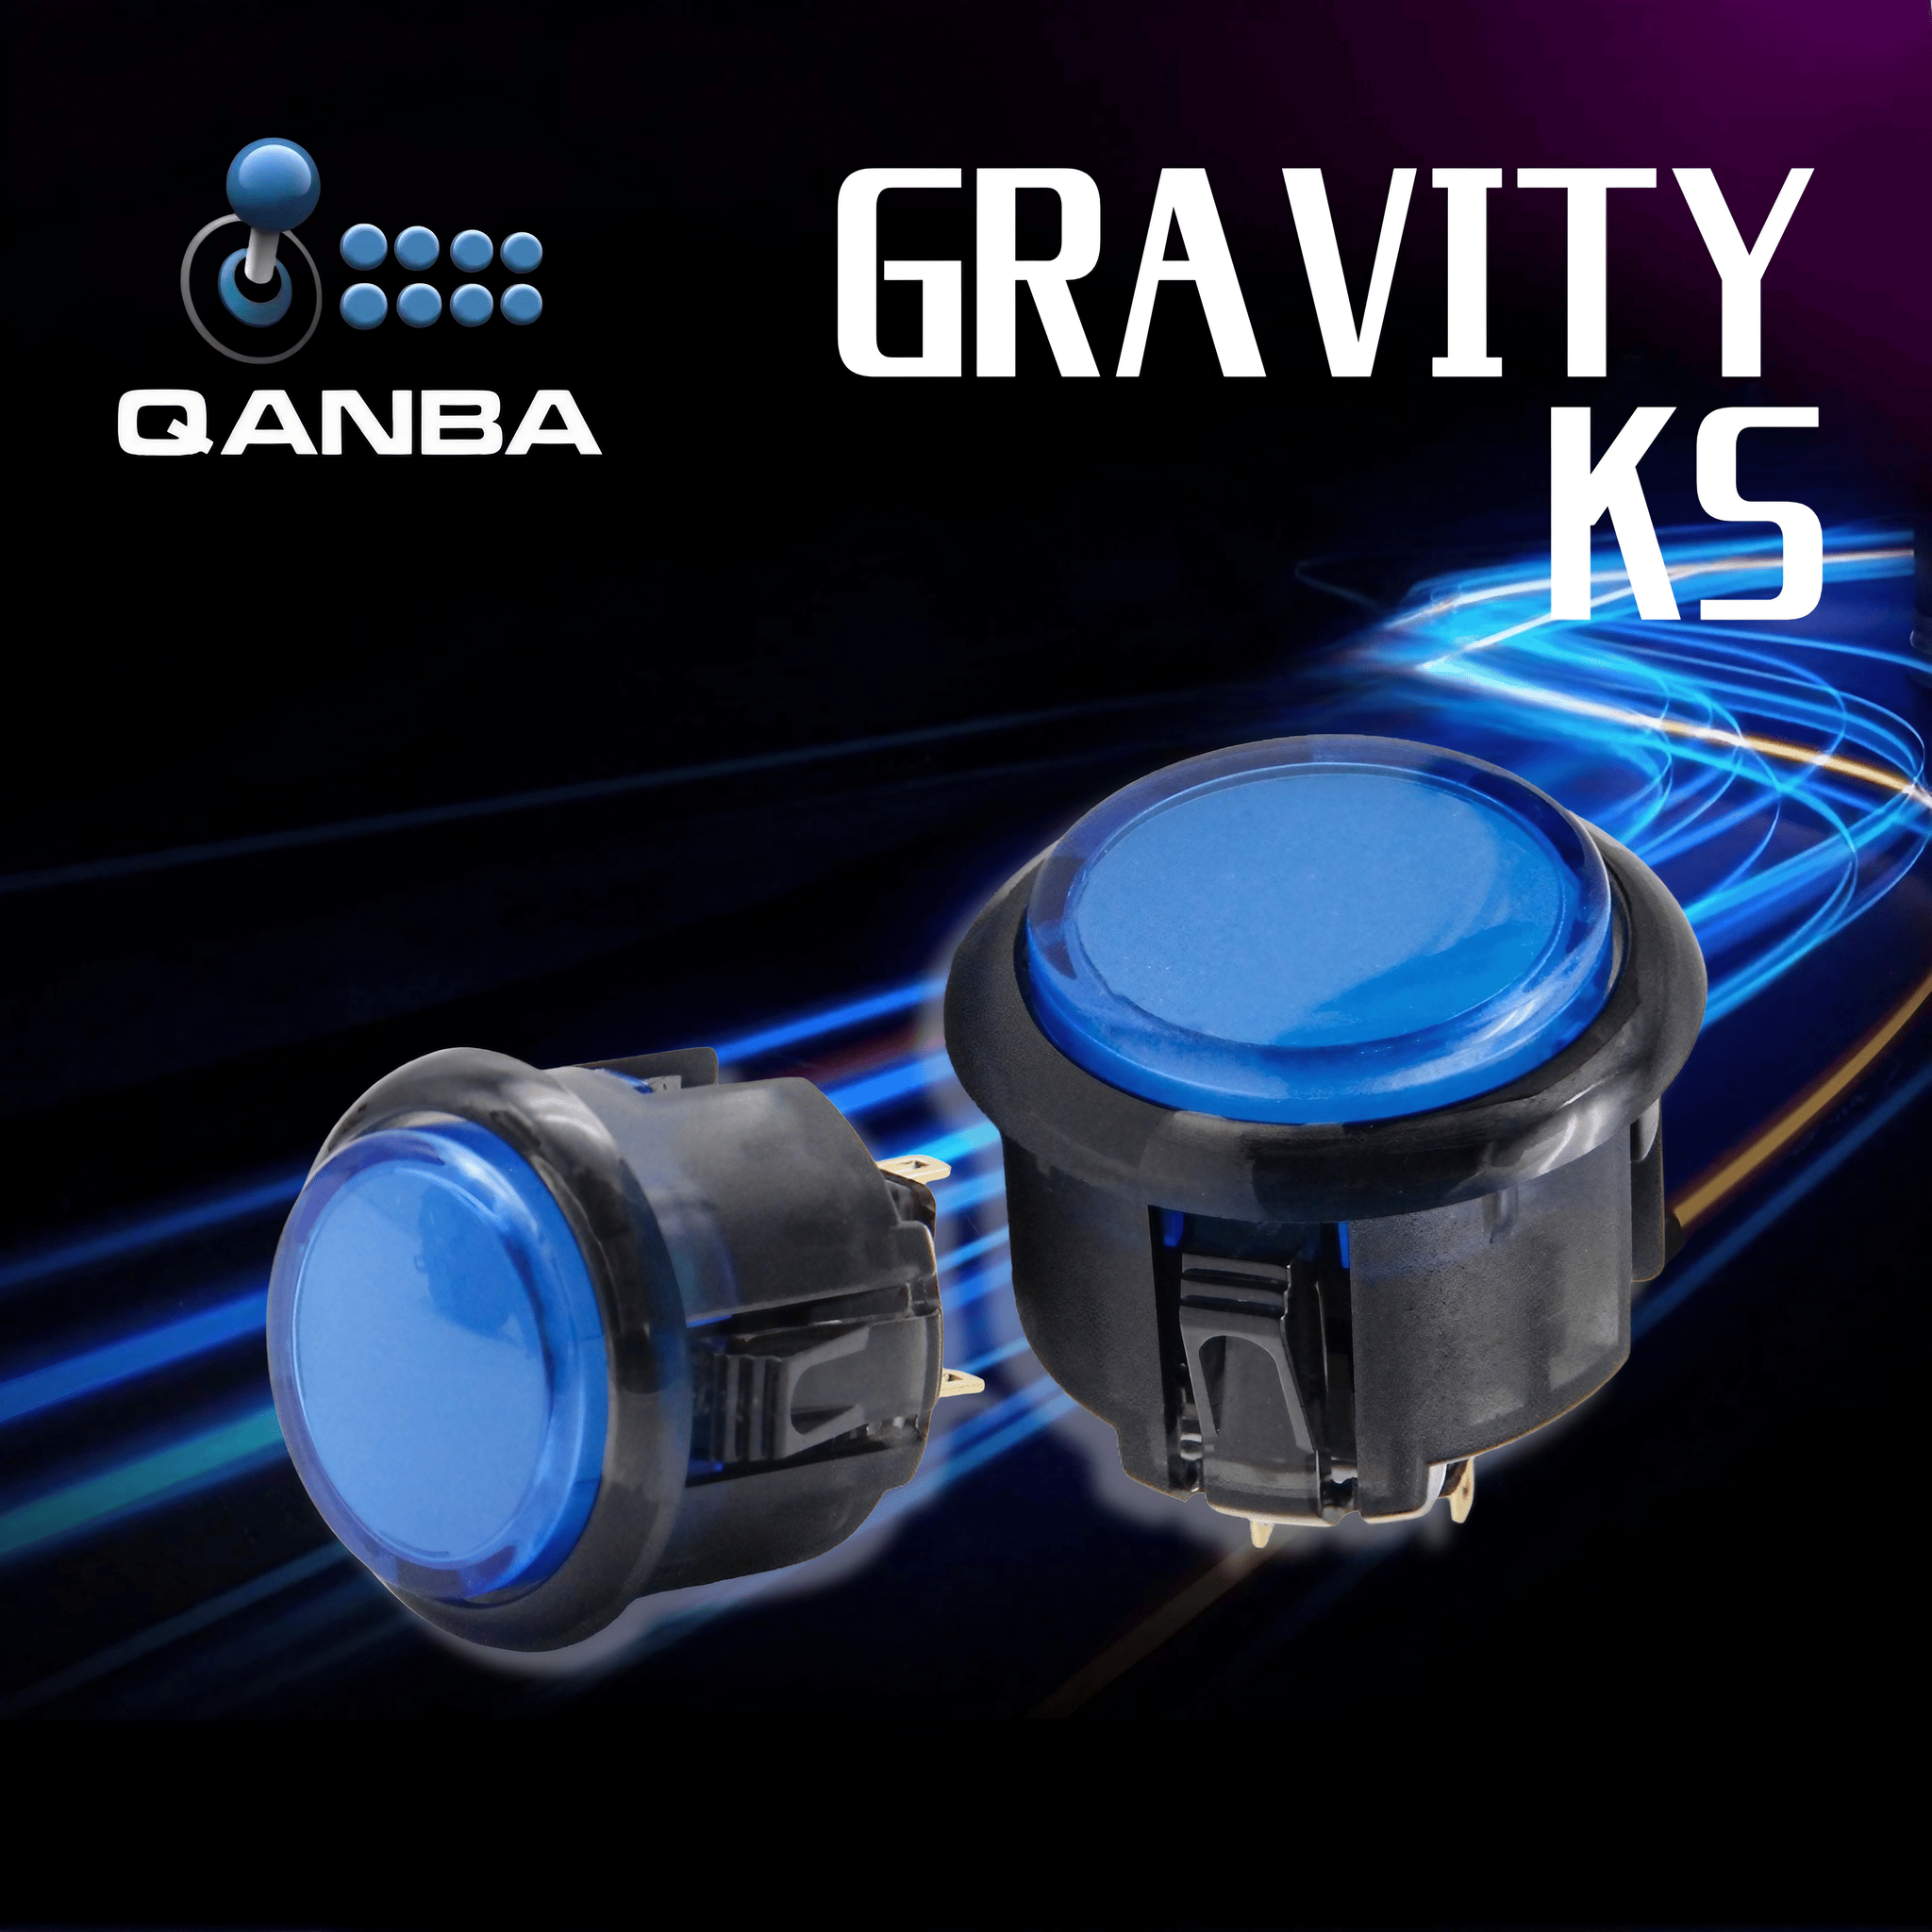 QANBA Gravity KS ハメ込み式 24/30mm - Black/Blue / 24mm